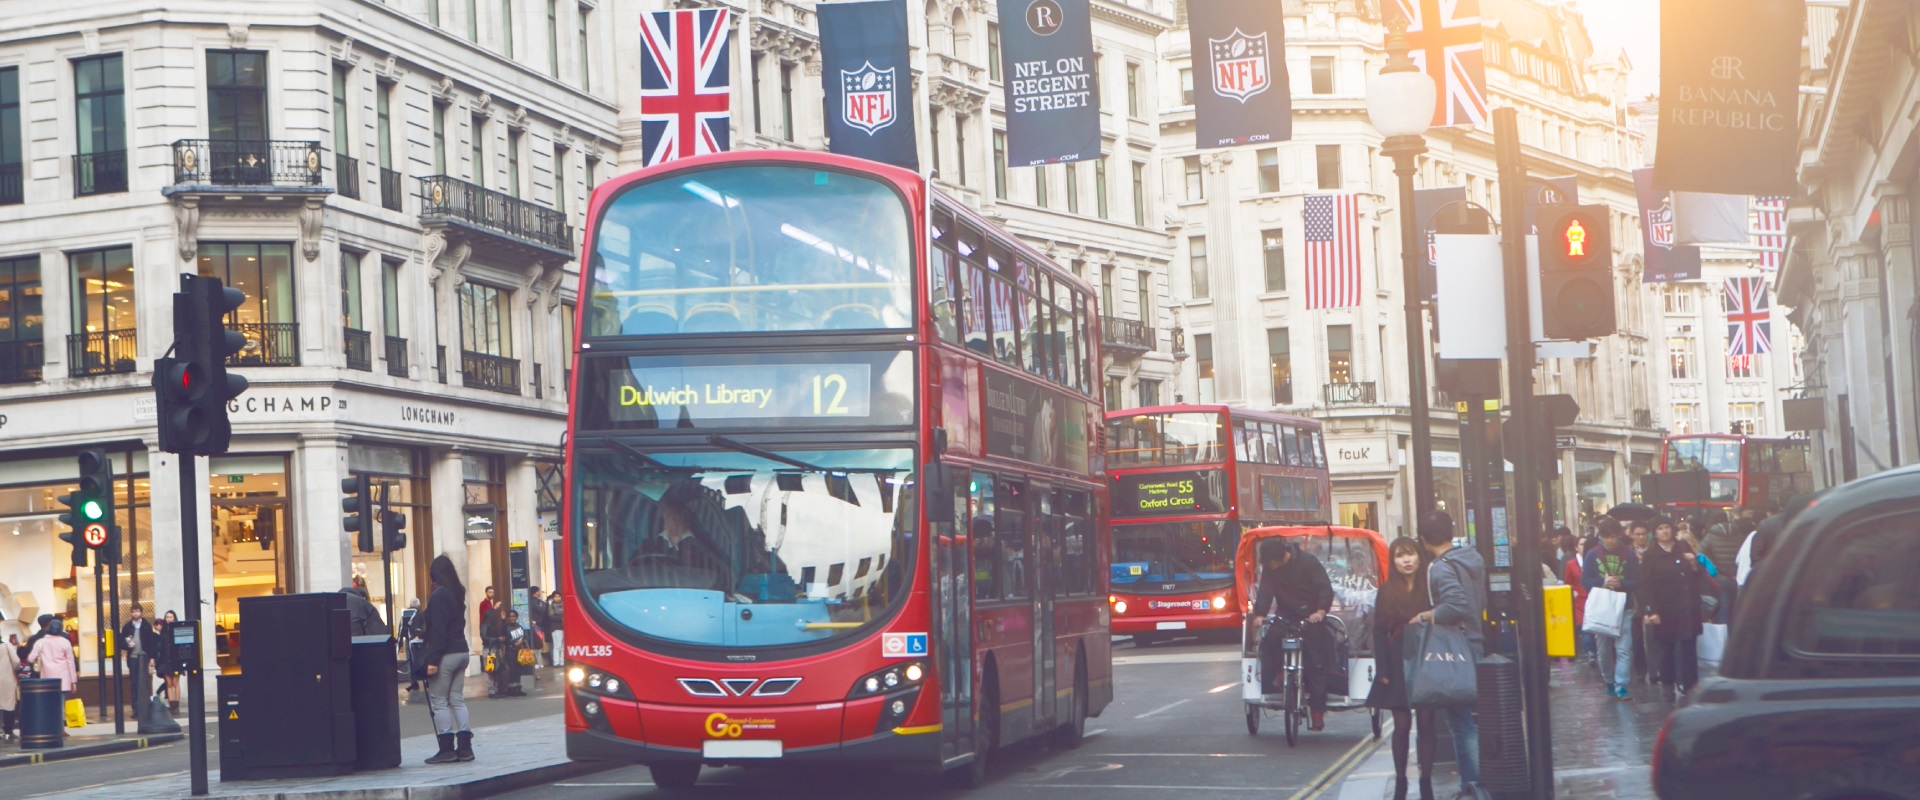 A double decker London bus